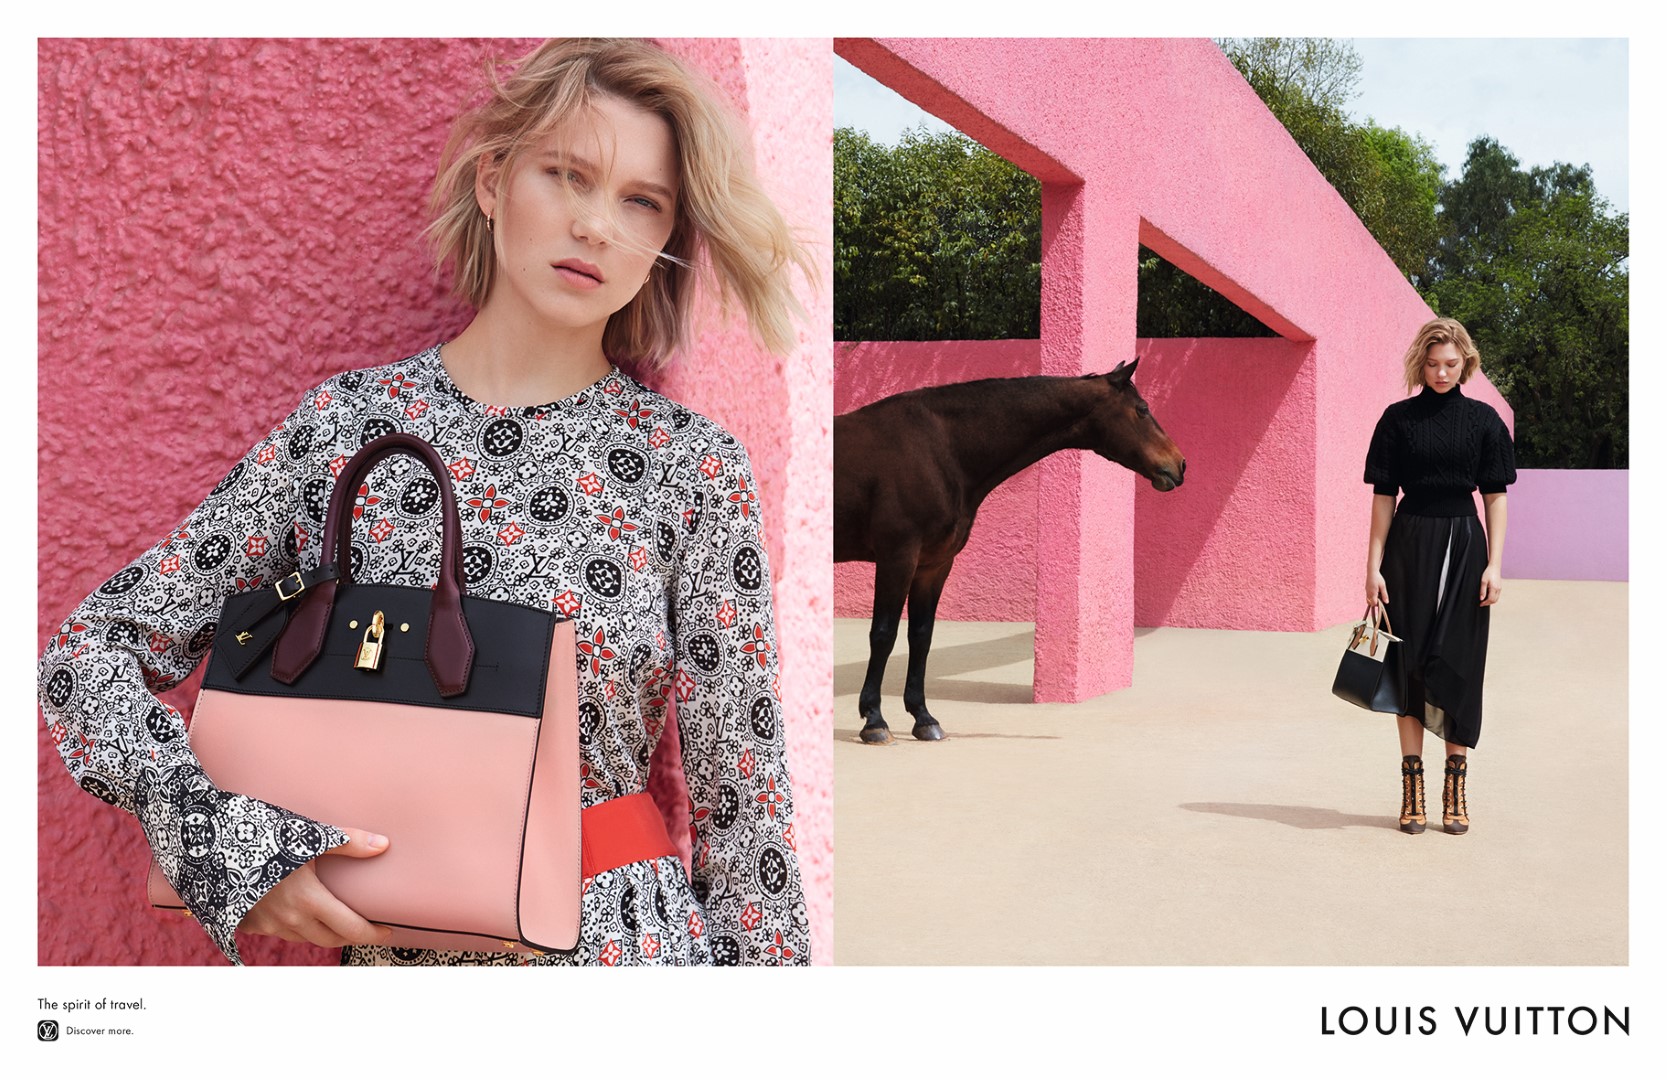 Louis Vuitton campagna Travel primavera estate 2016: protagonista Léa Seydoux